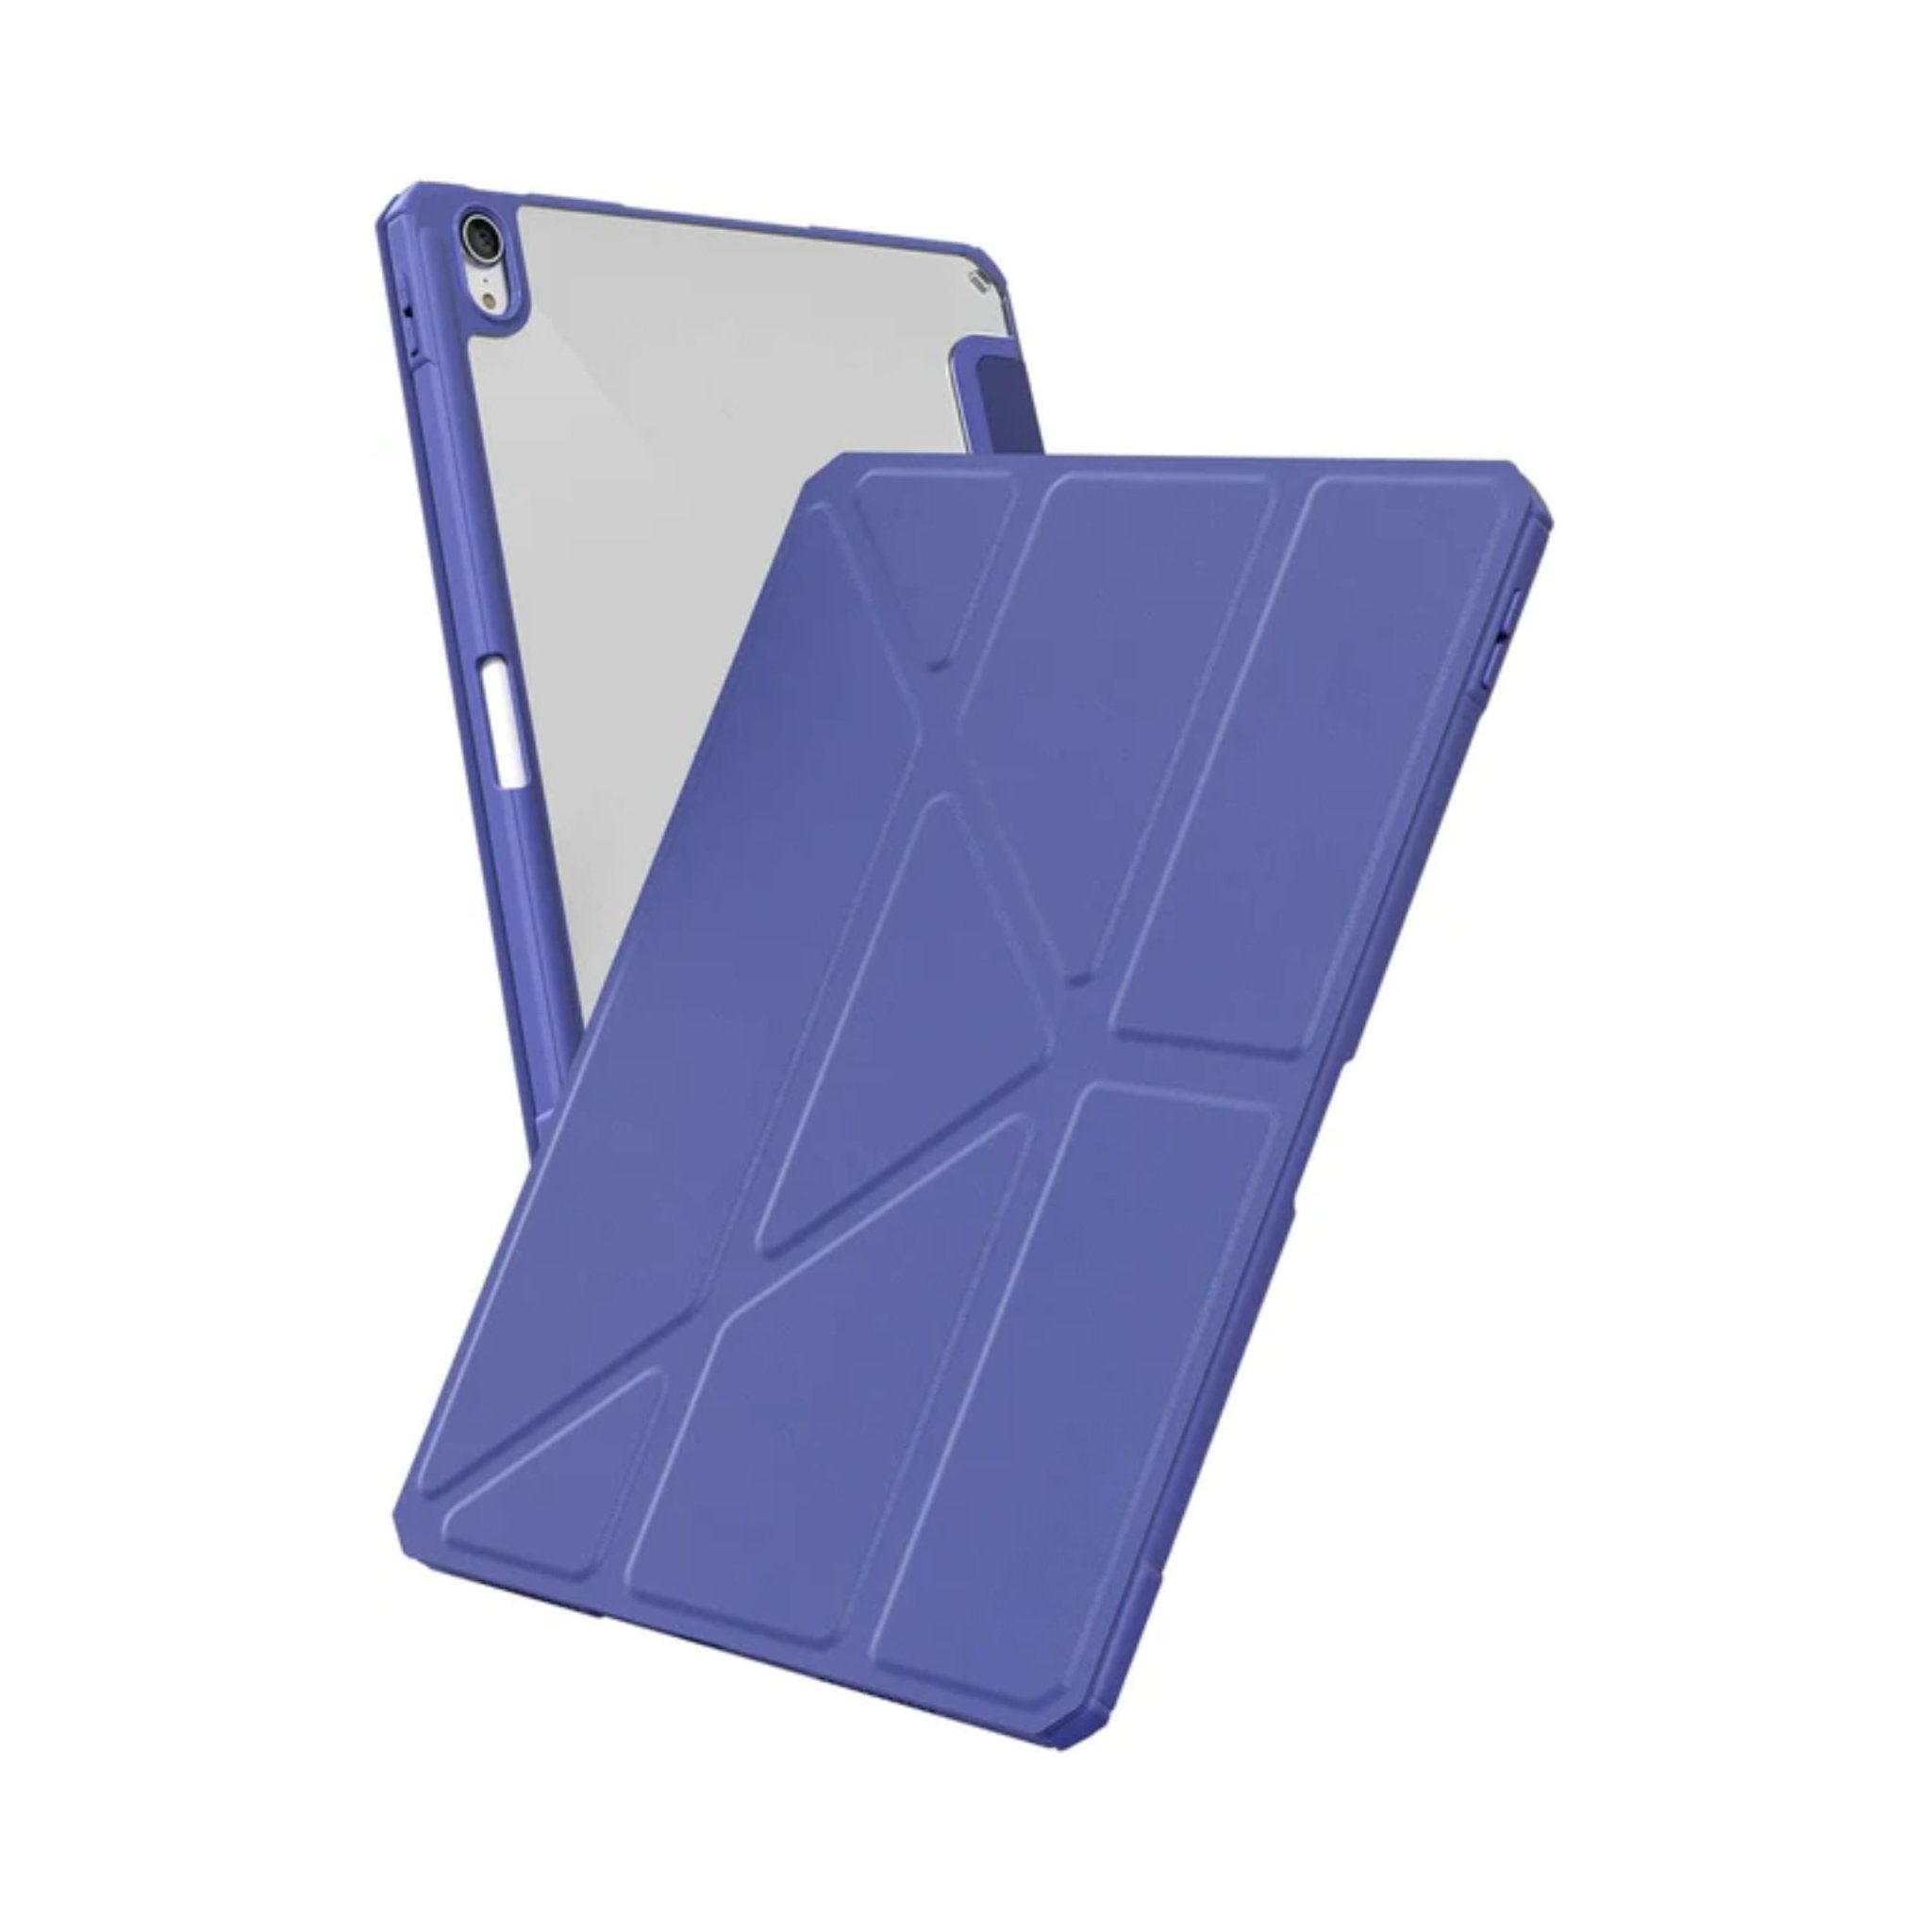 Blupebble Hybrid Folio For iPad Air 10.9" 5th Gen - Purple